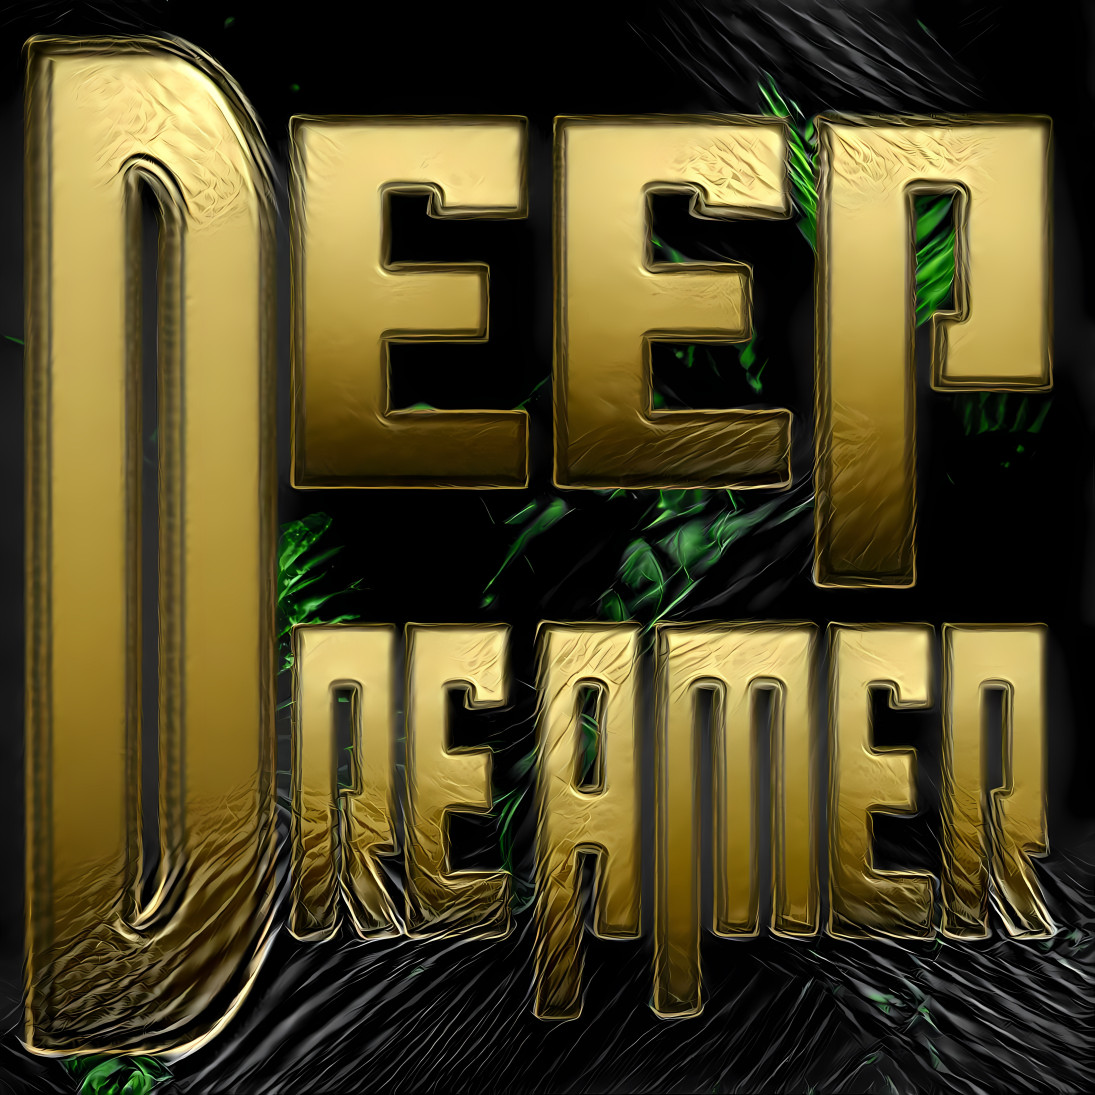 Deep dreamer